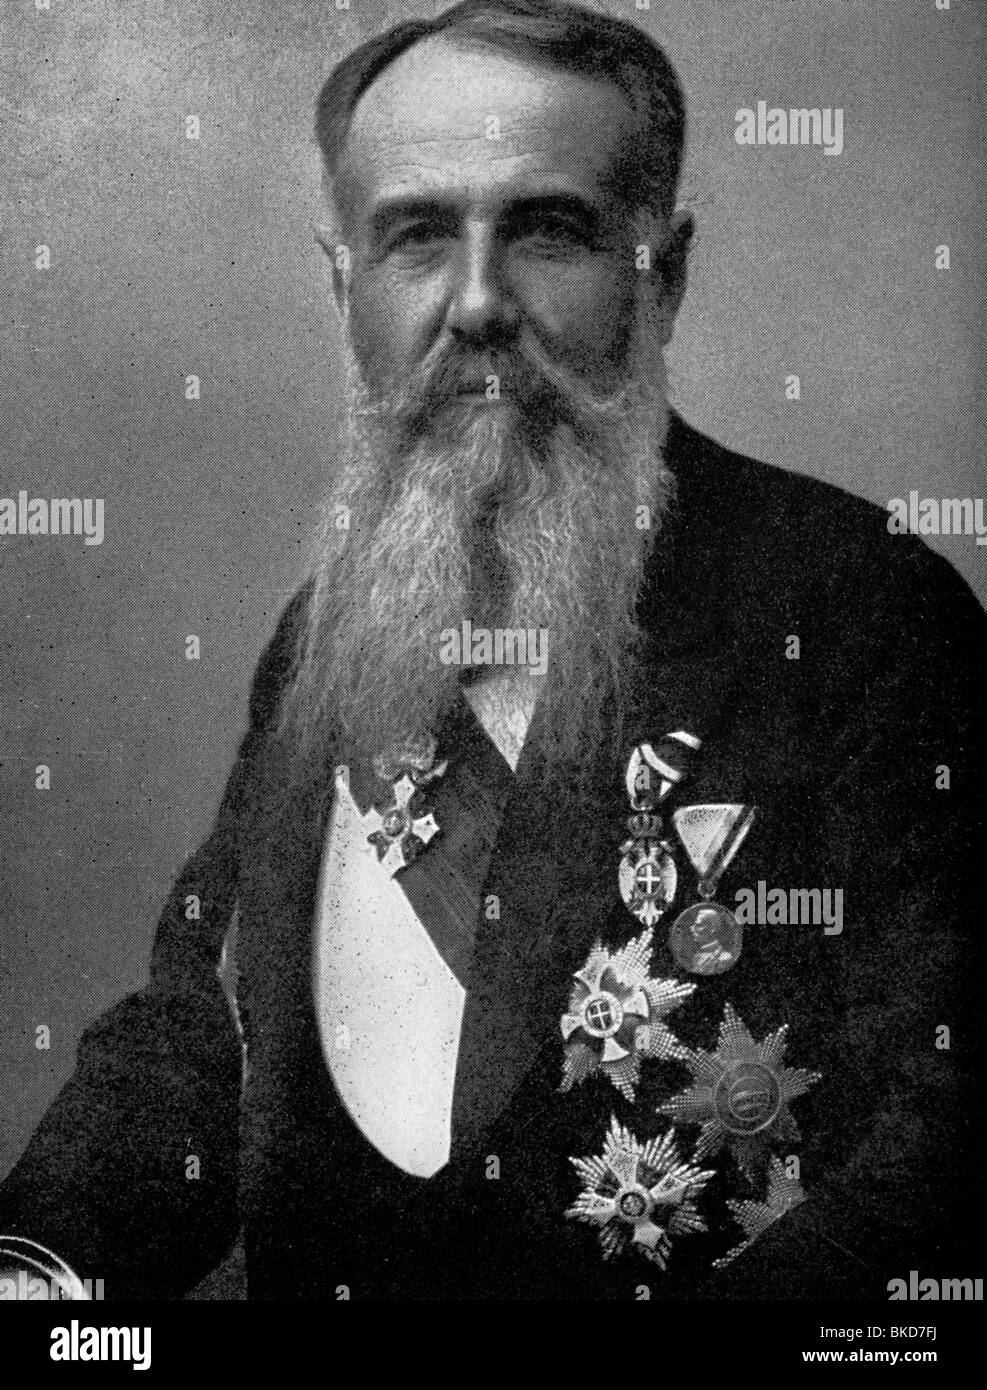 Pasic, Nikola, 1.1.1846 - 10.12.1926, Serbian politician, portrait, circa 1914, Stock Photo